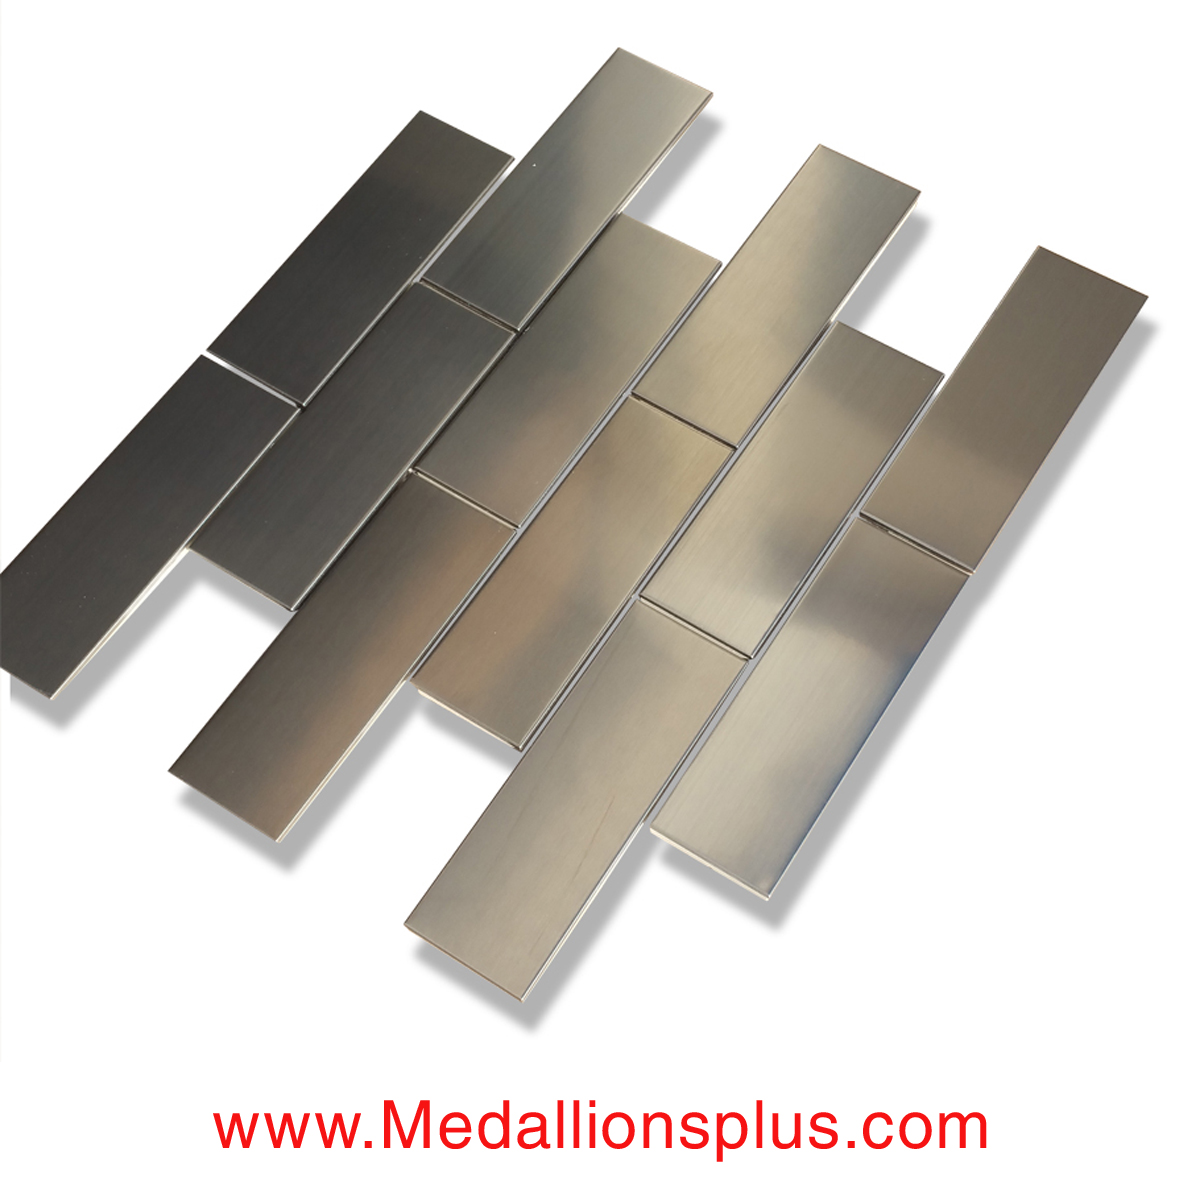 Brick Stainless Steel Tile